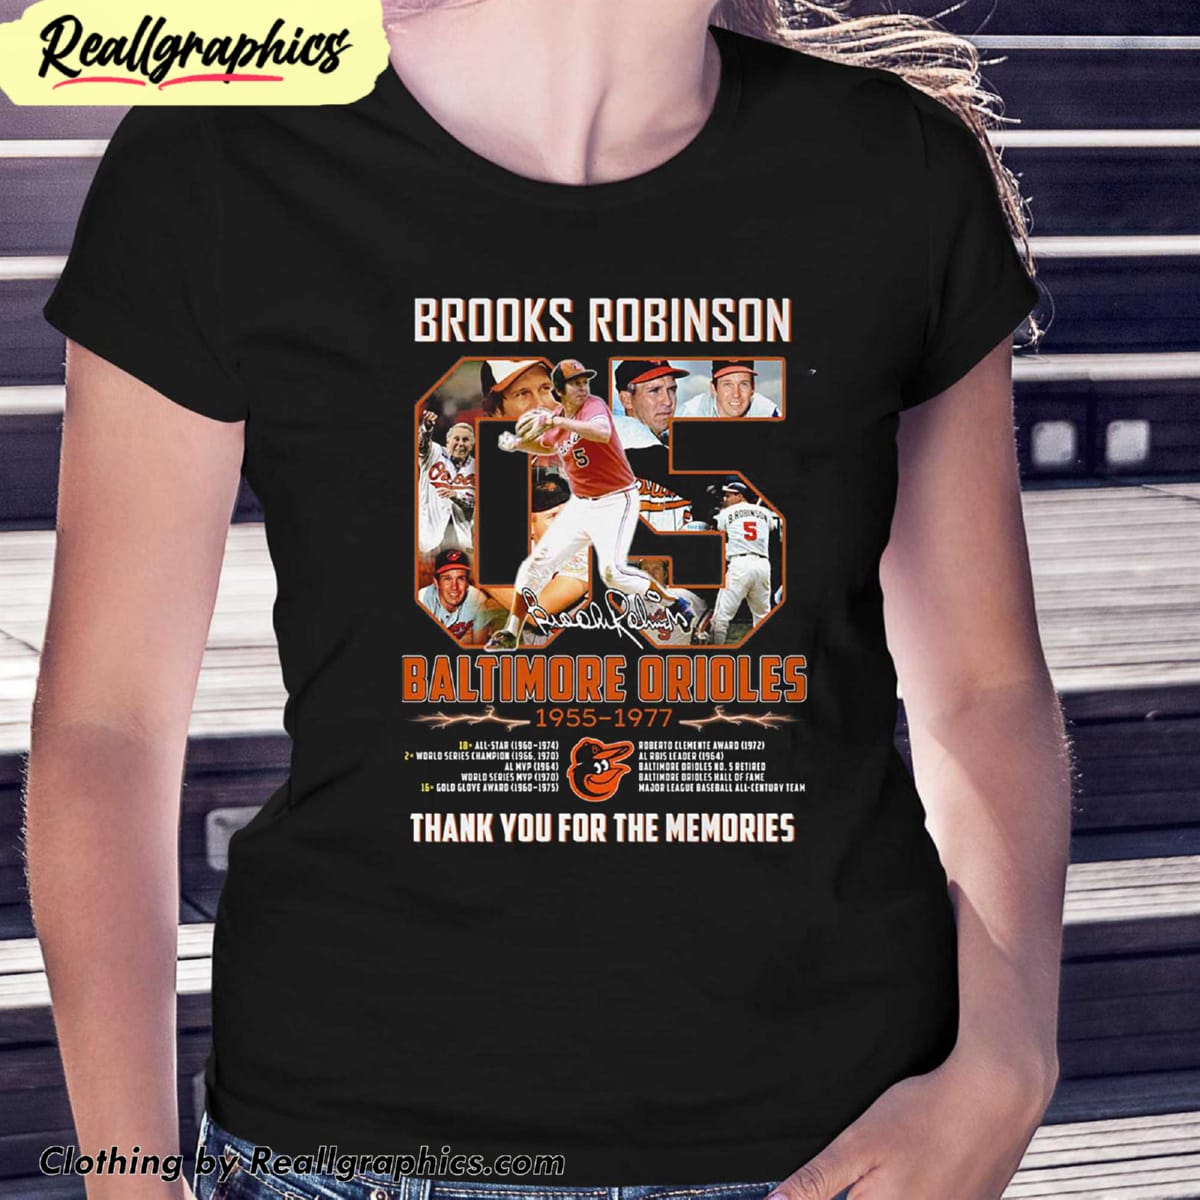 Brooks Robinson Maltimore Orioles 1955 1977 Memories T Shirt - Reallgraphics